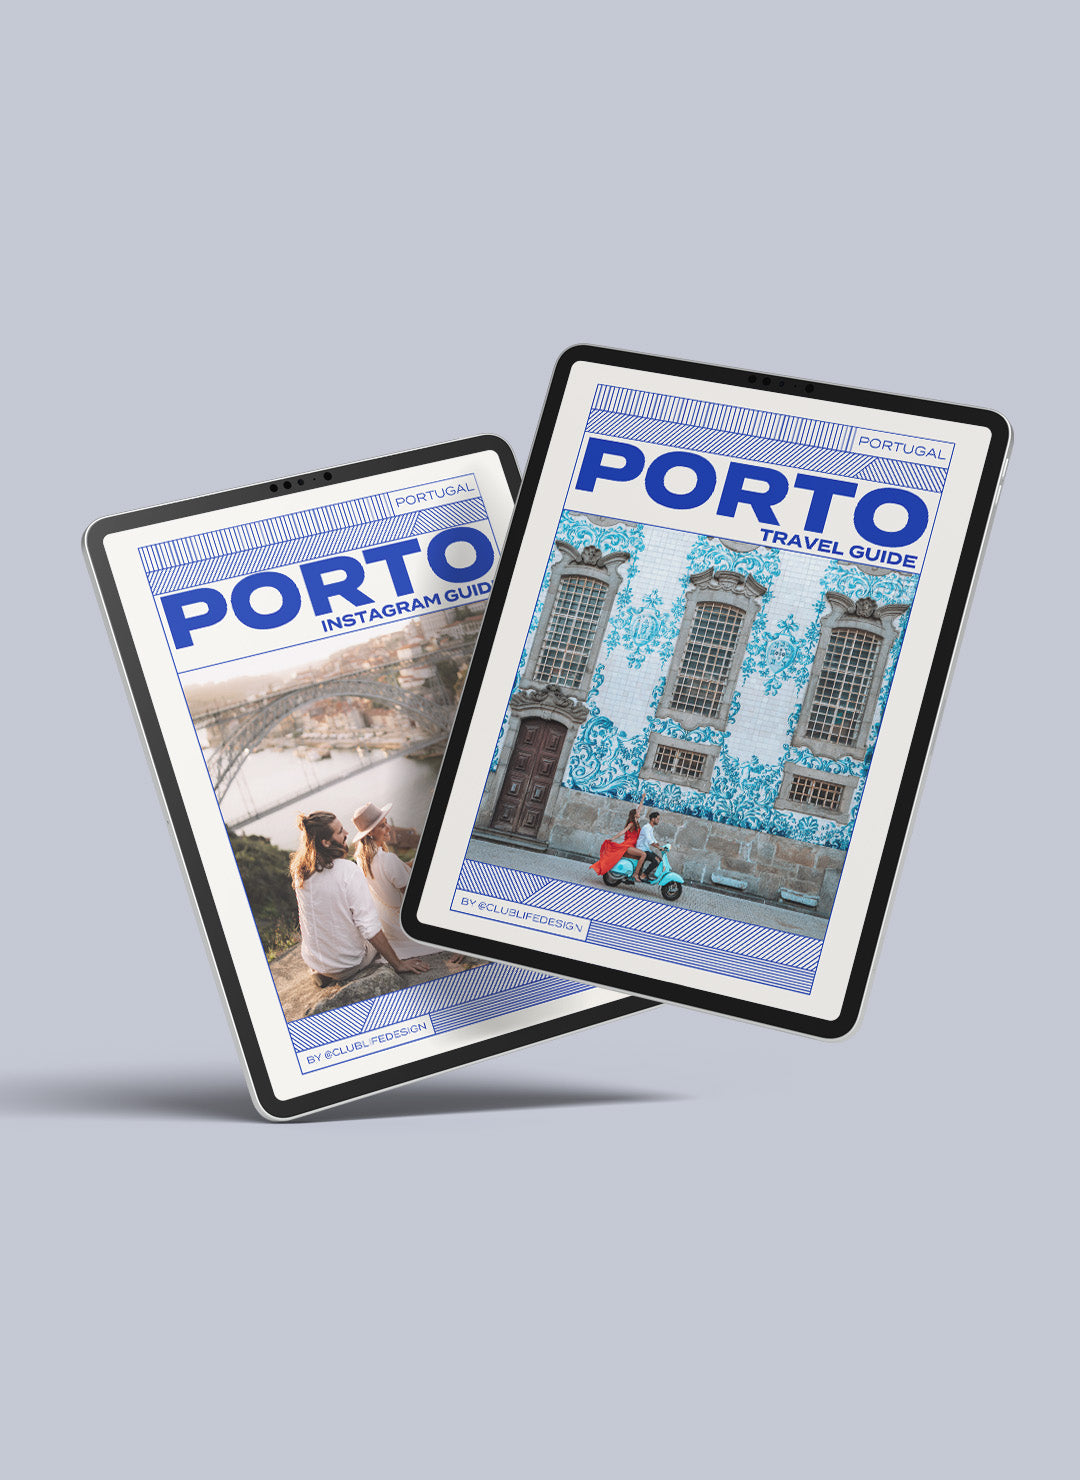 Porto Explorer Bundle: Travel Guide & Instagrammable Photo Spot Guide